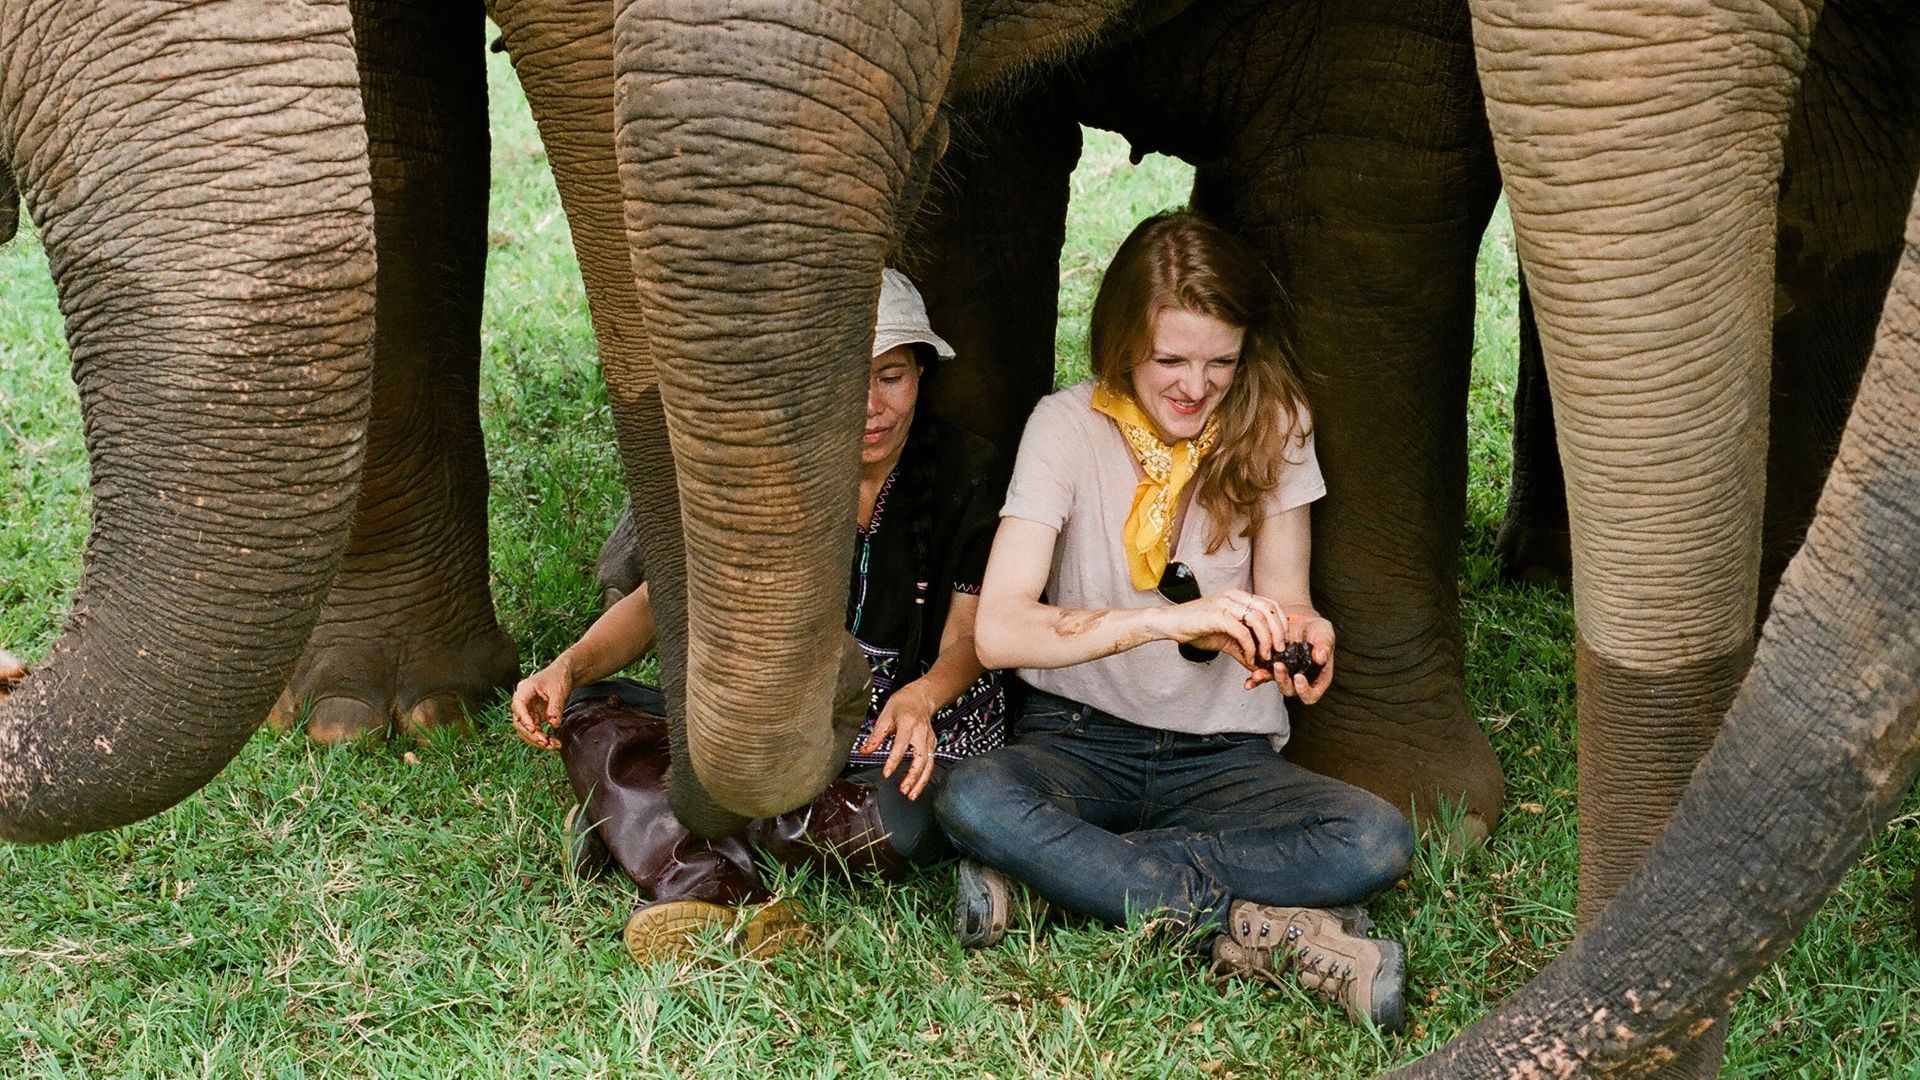 Love & Bananas: An Elephant Story background